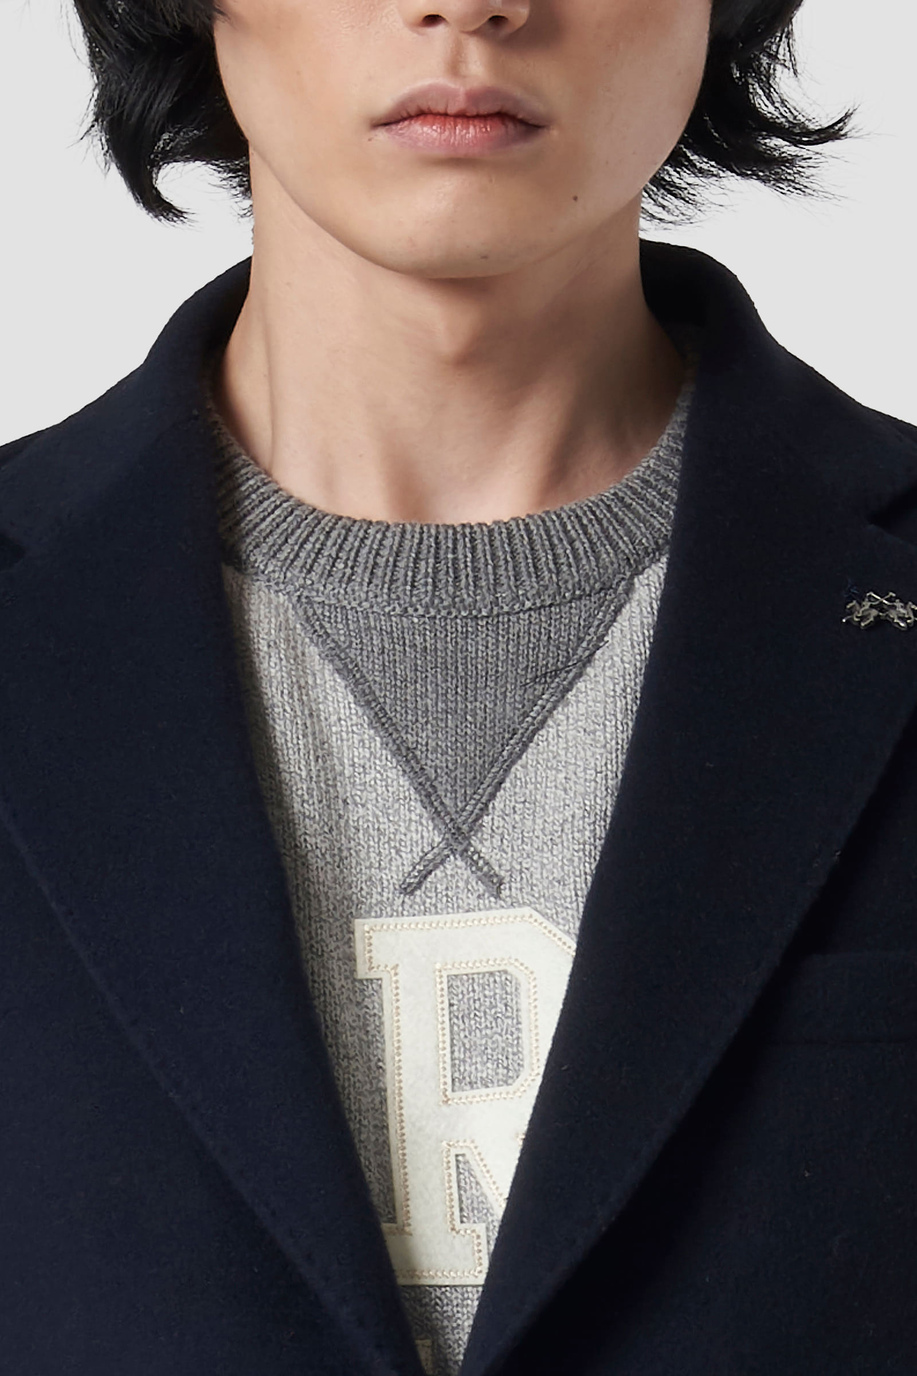 Blue Ribbon Herren Blazer Jacke Wolle und Kaschmir Regular Fit - Jacken | La Martina - Official Online Shop